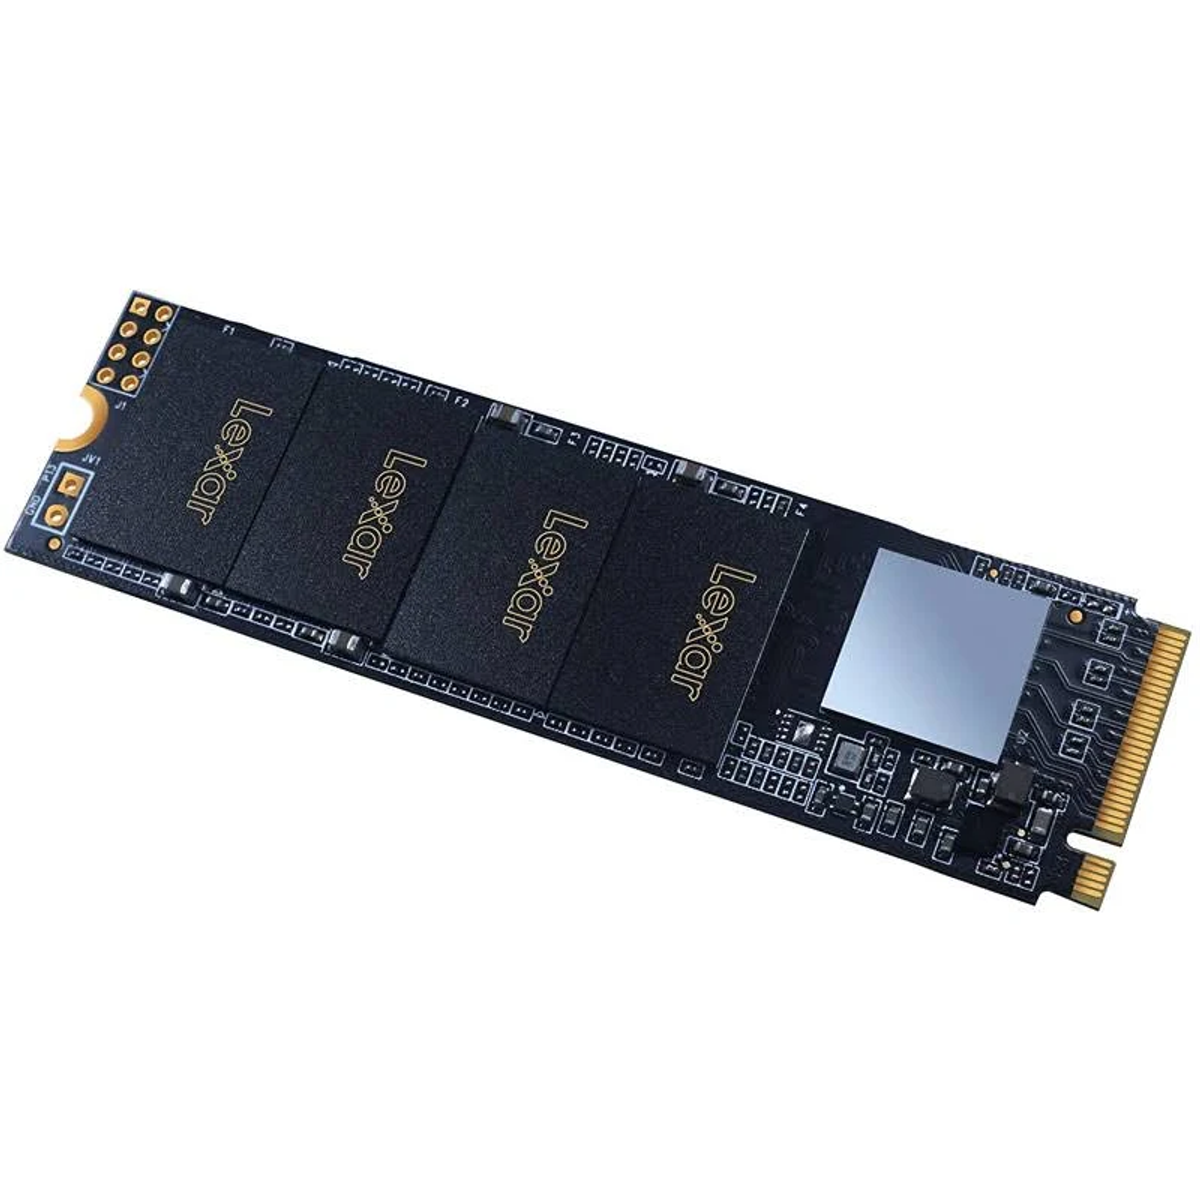 LEXAR LNM610-500RB, 500 GB, SSD, intern